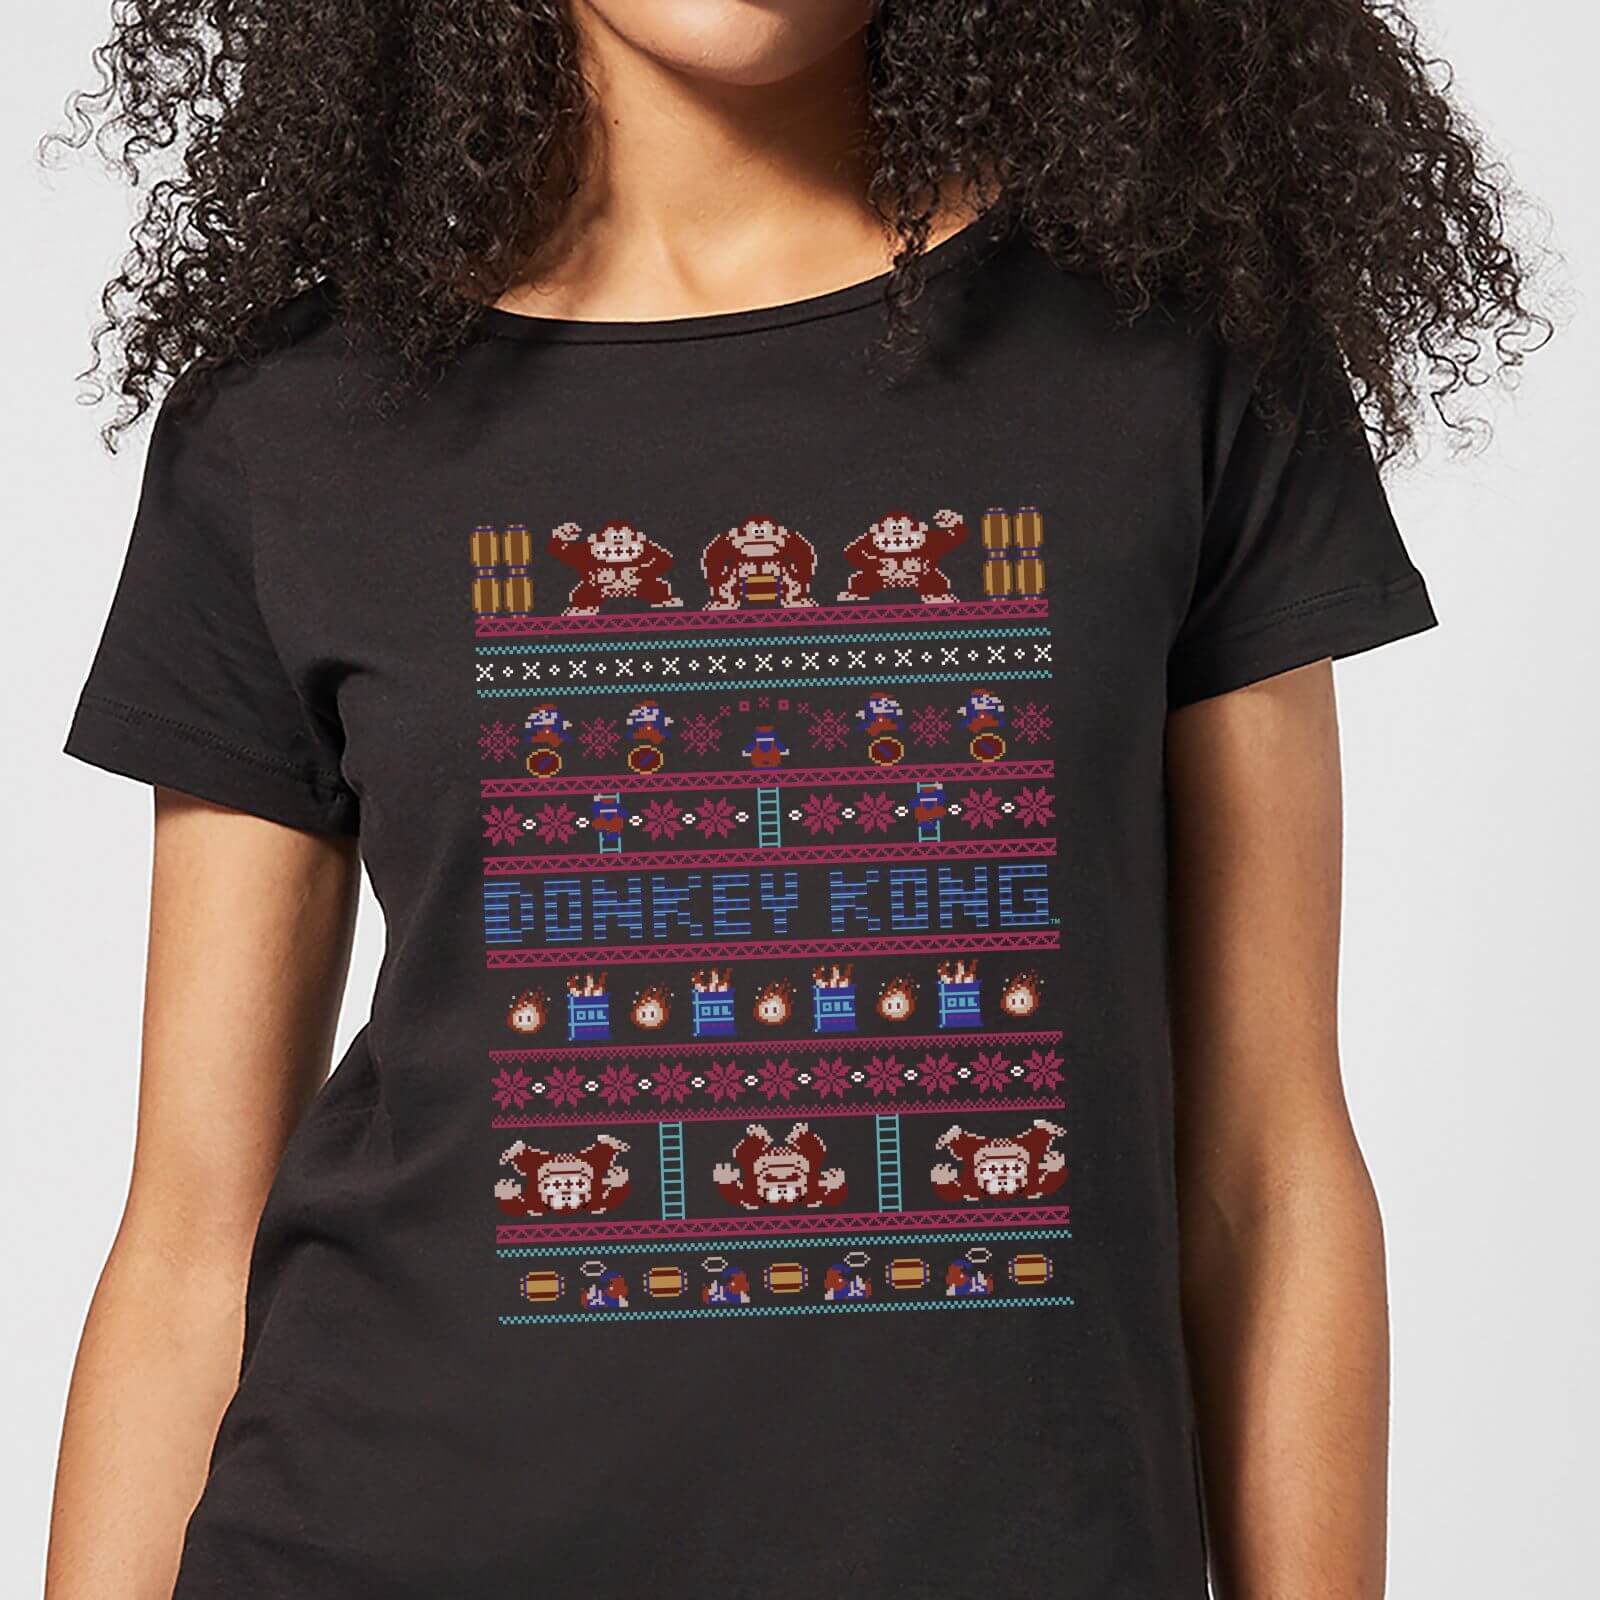 Nintendo Donkey Kong Retro Black Christmas Women's Christmas T-Shirt - Black - XXL - Black